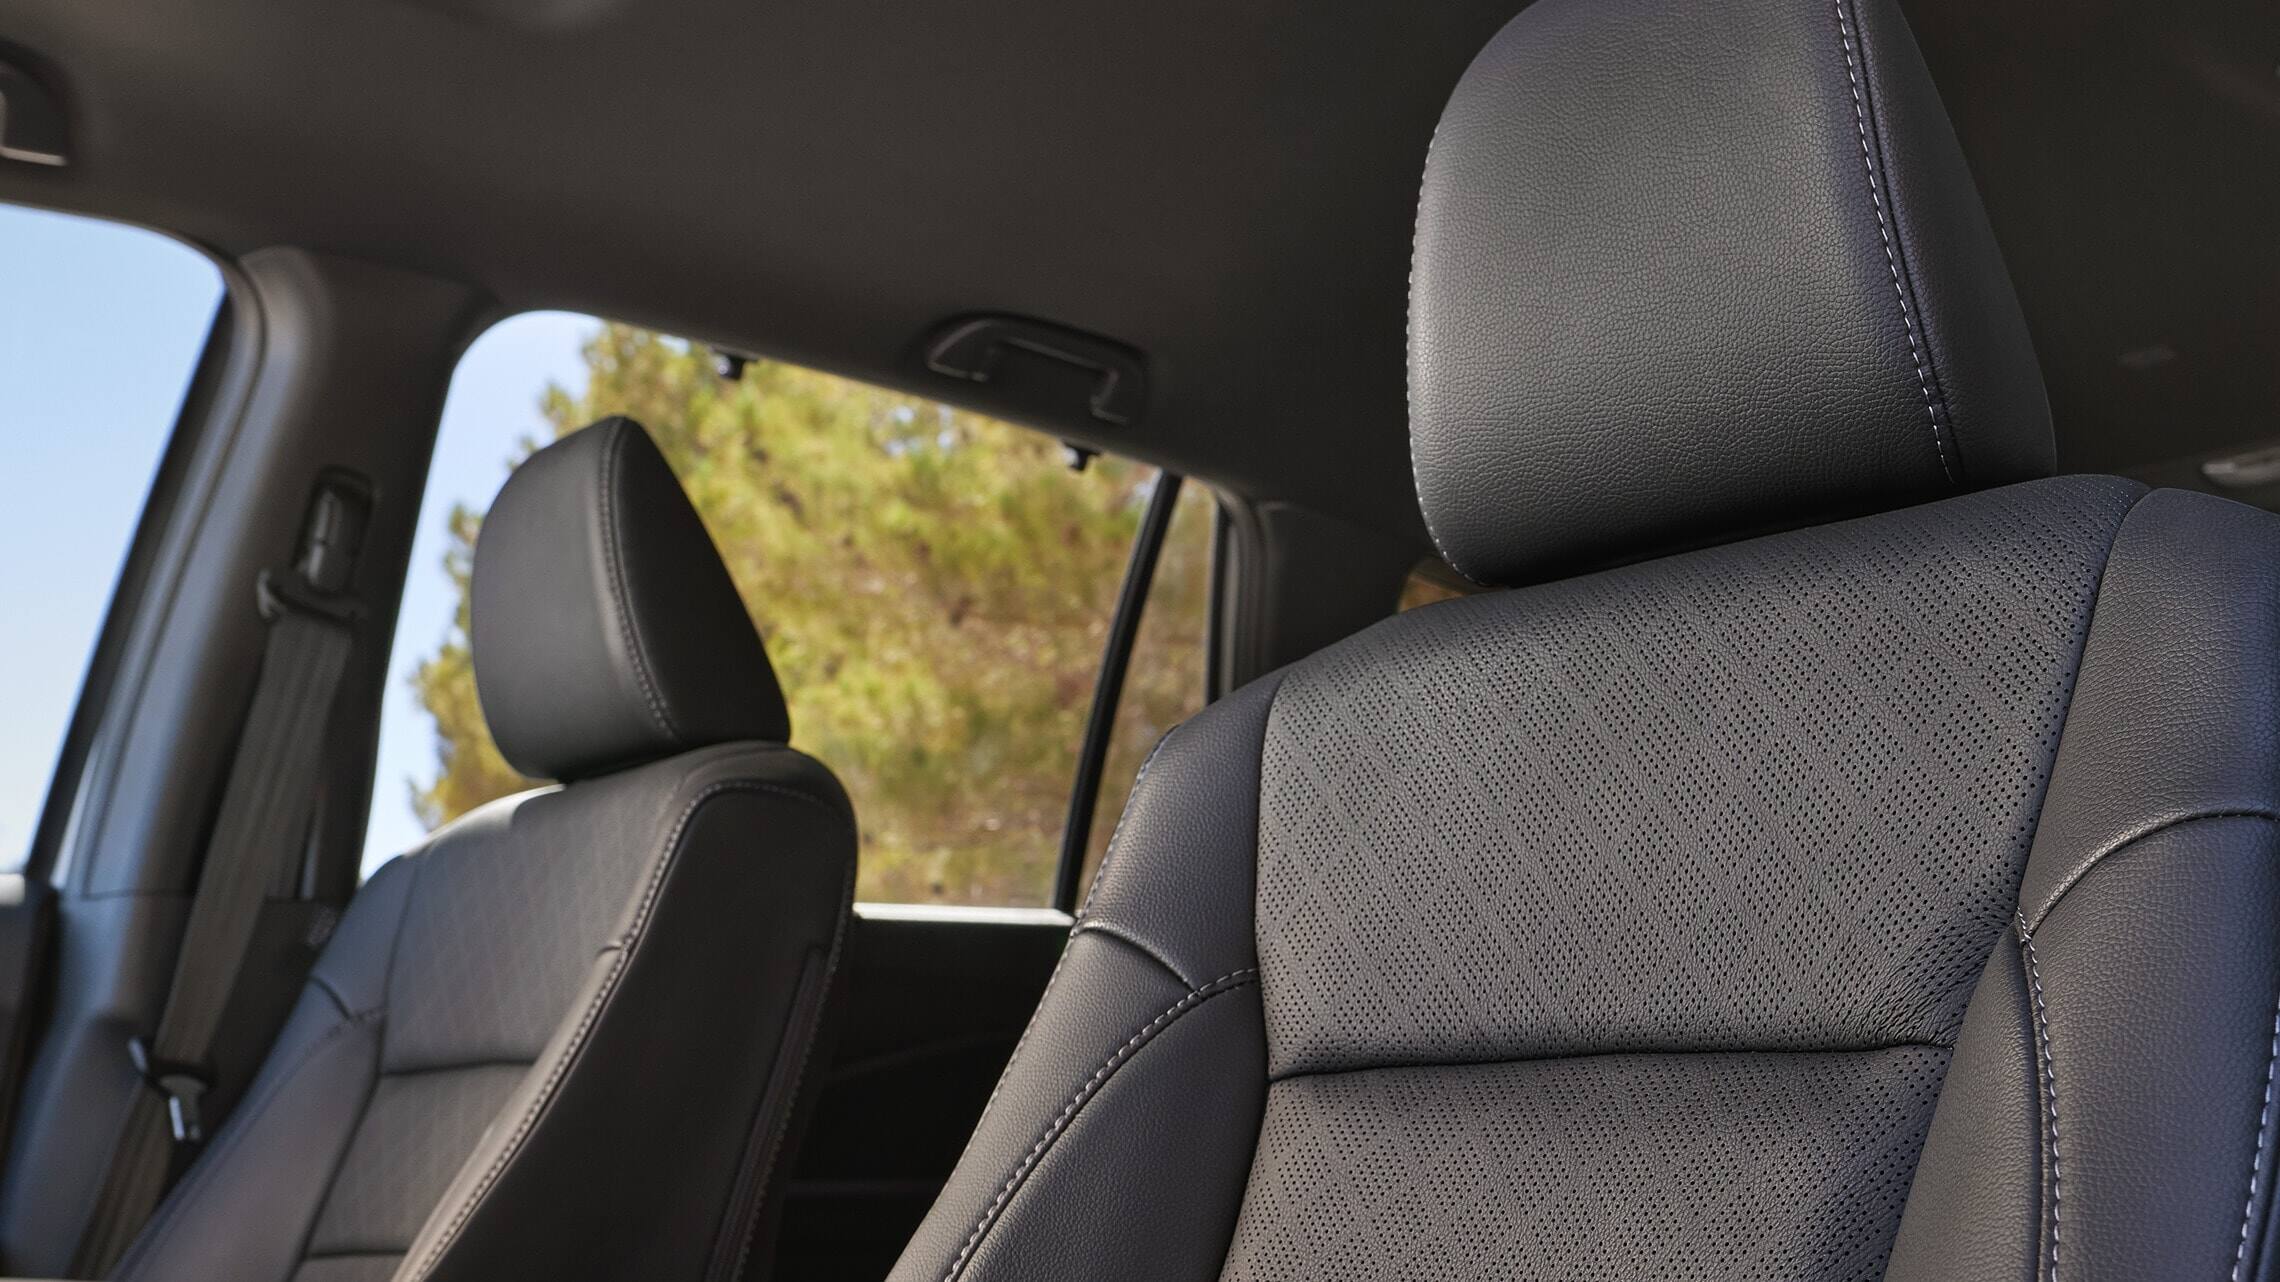 2019 Honda Passport Elite interior front seats with Black Leather trim.